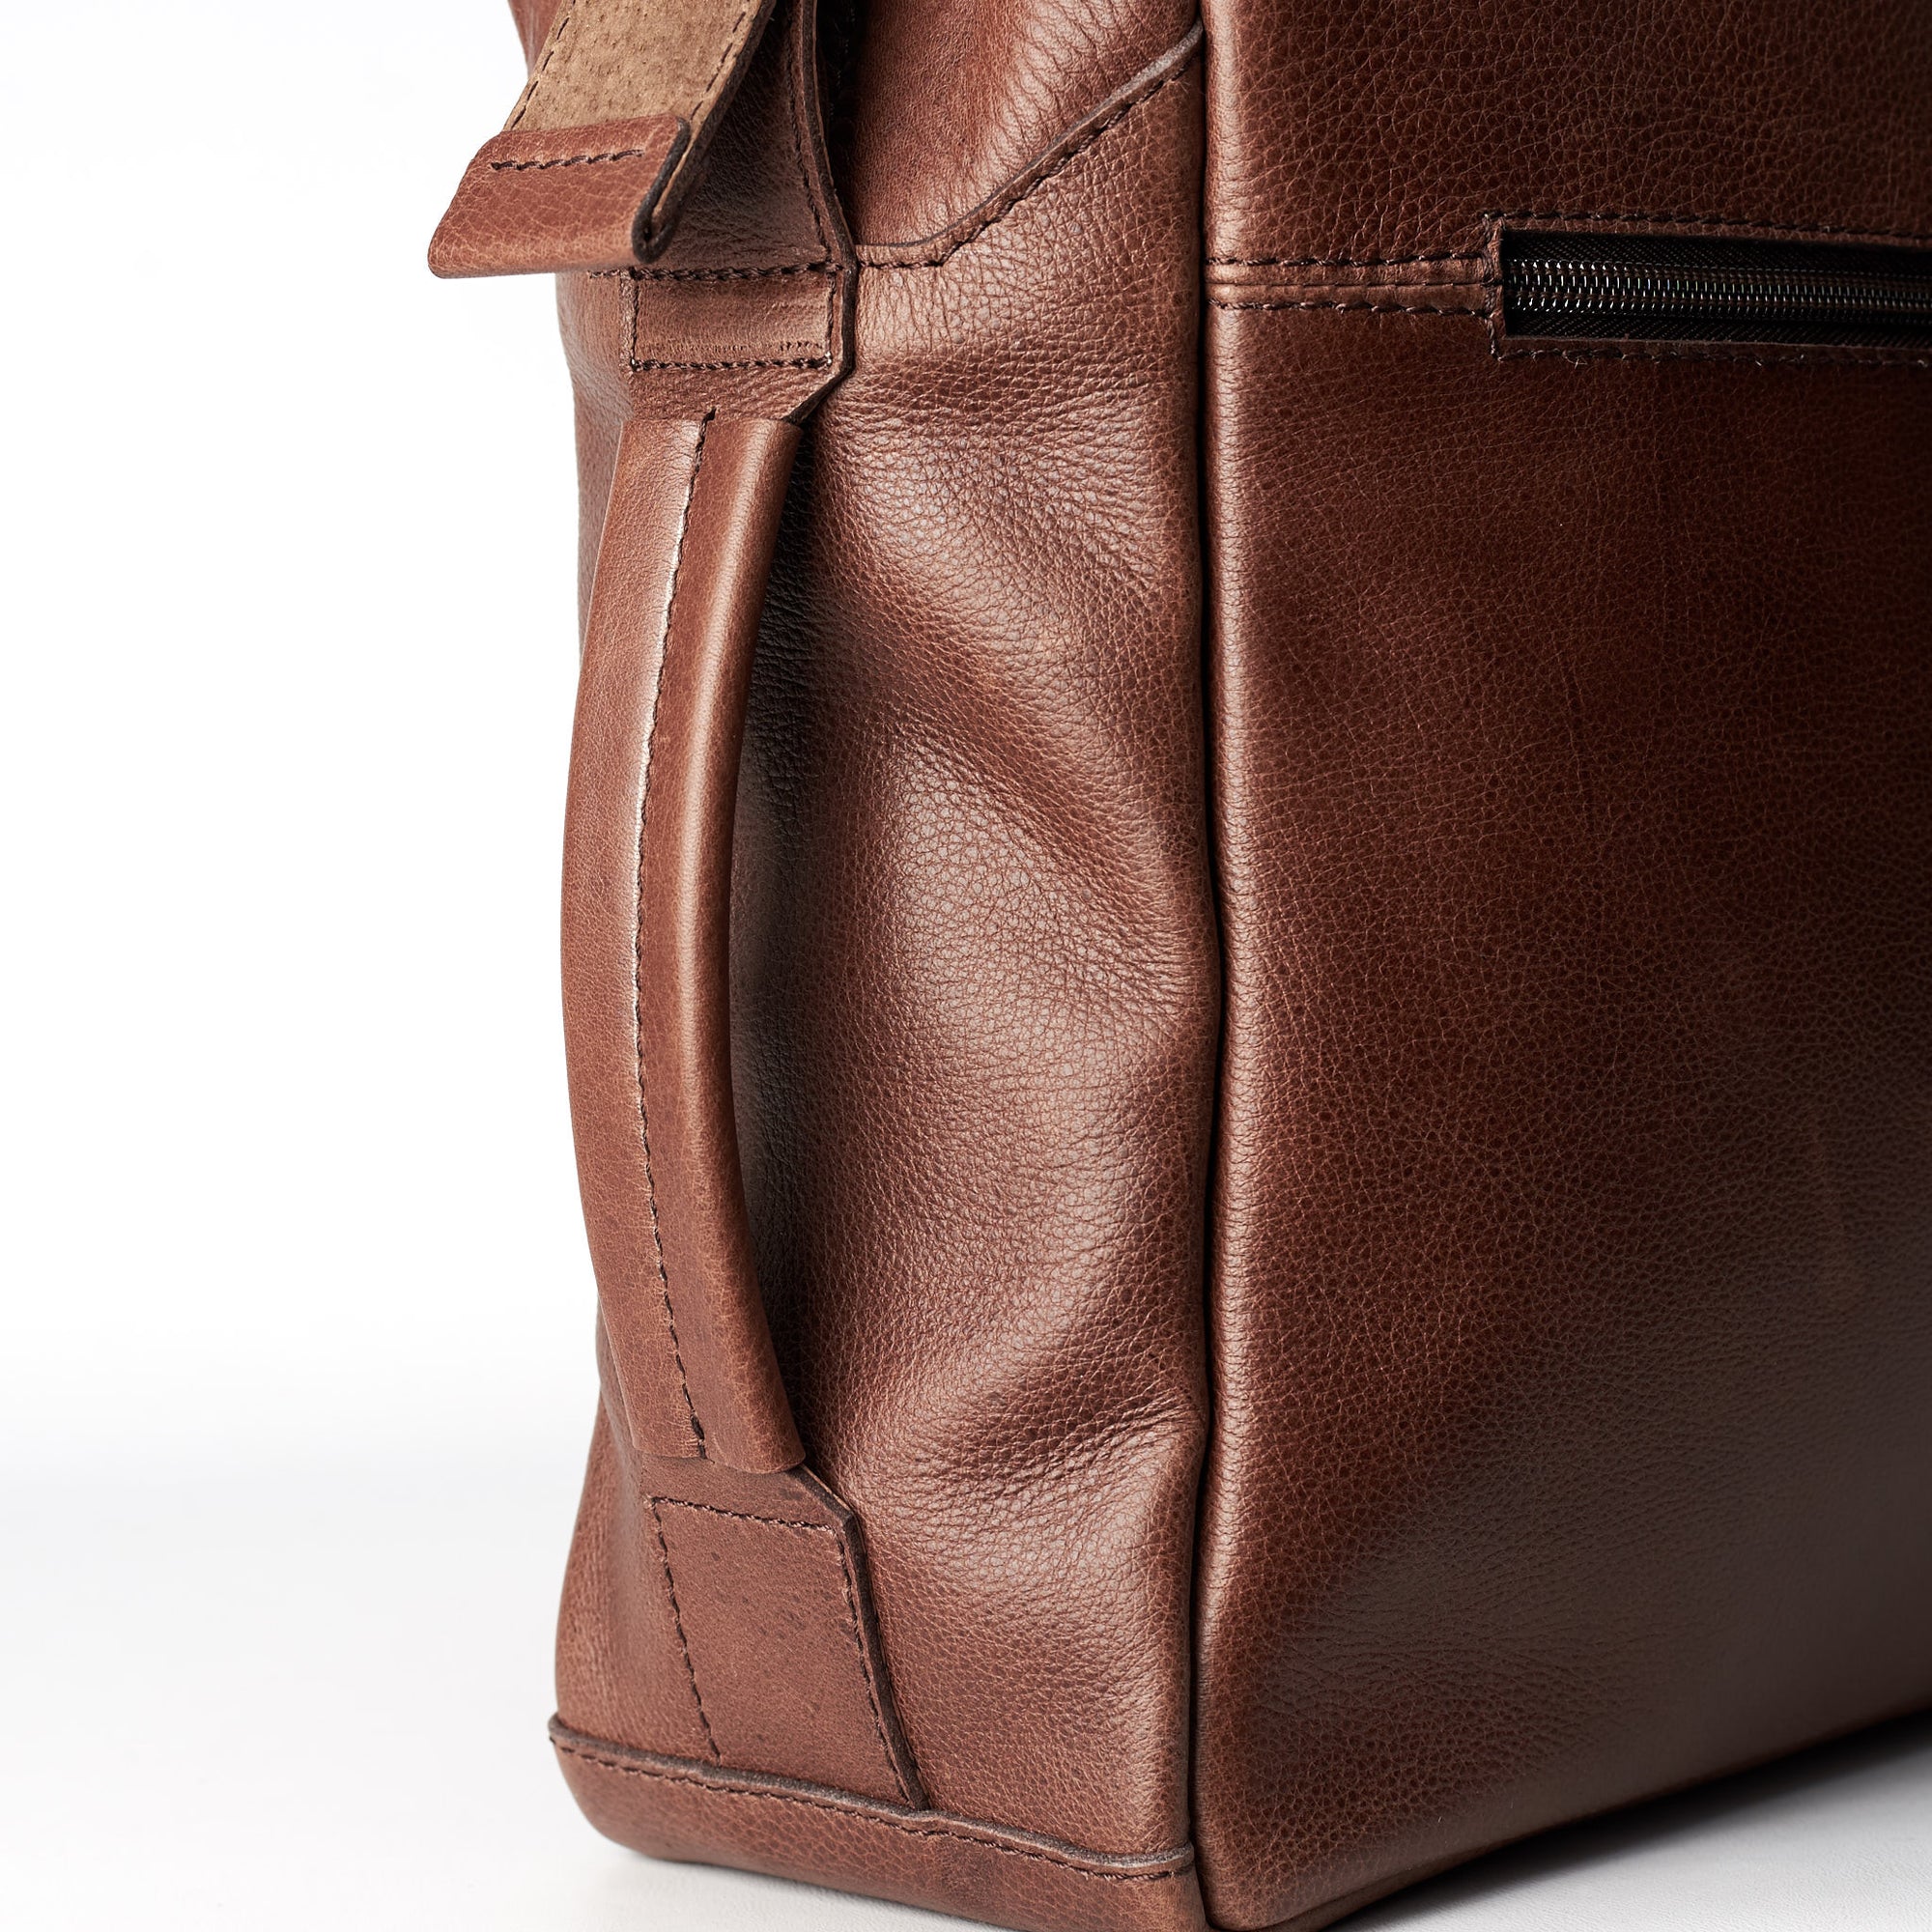 Handle Detail. Brown handmade leather messenger bag for men. Commuter bag, laptop leather bag by Capra Leather.